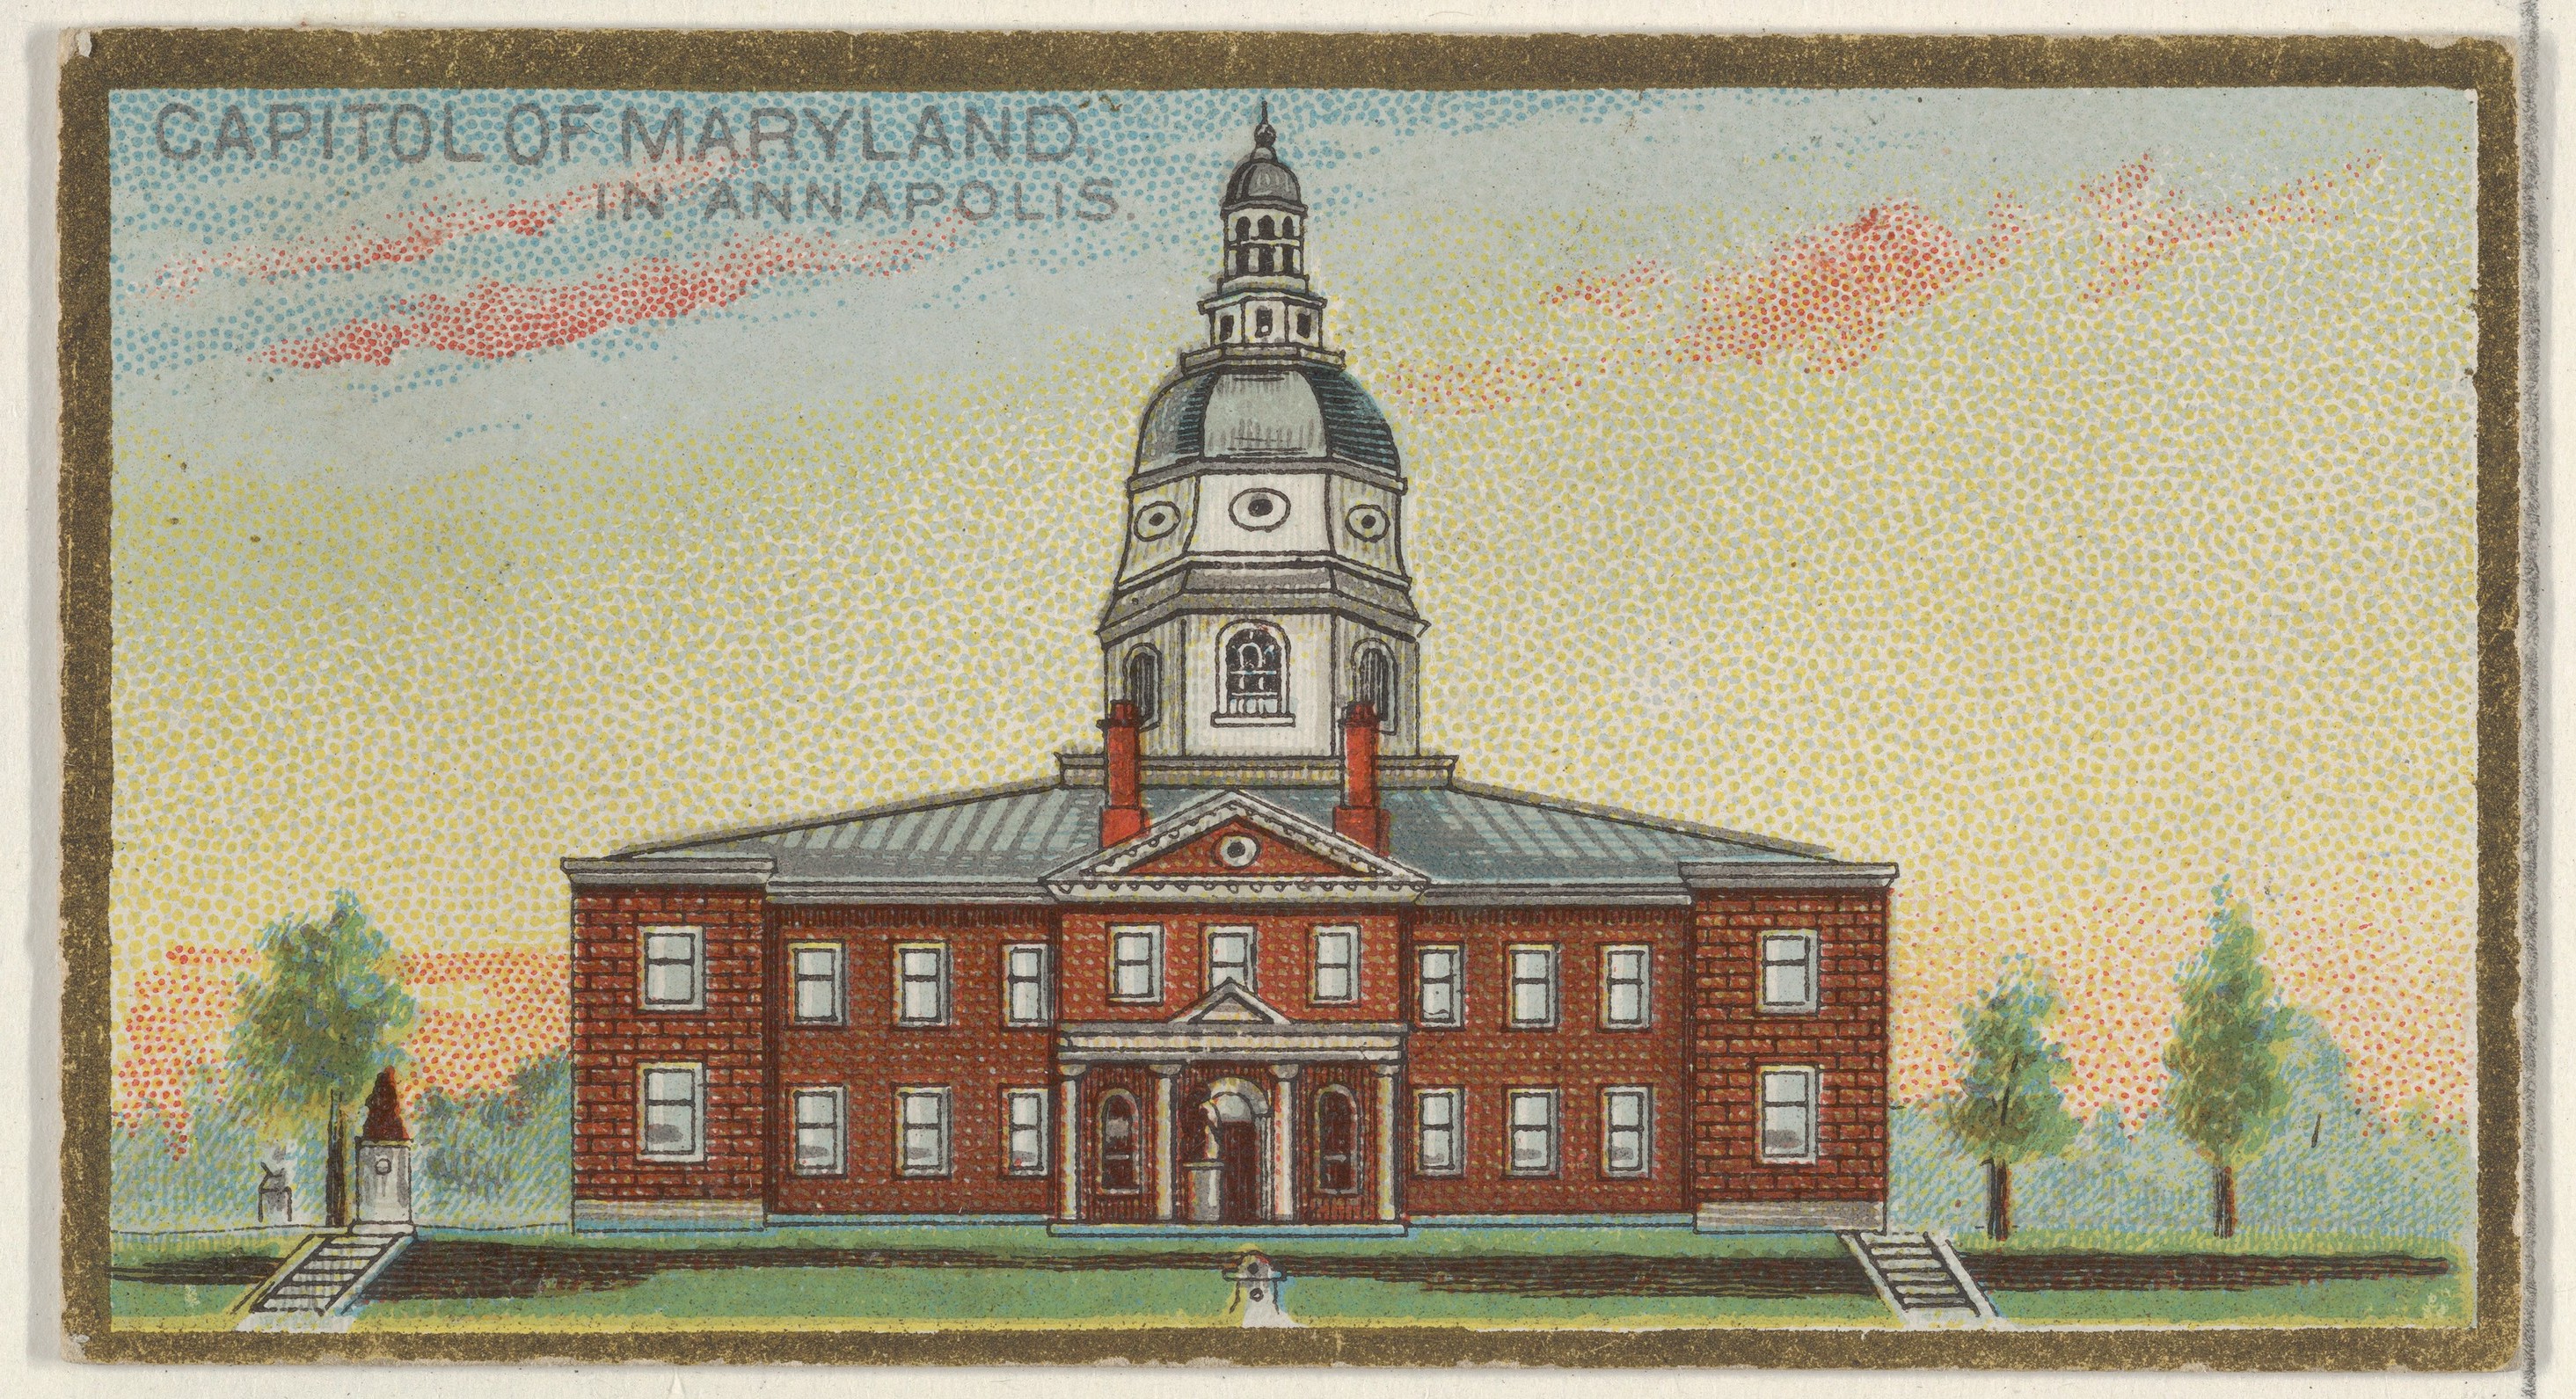 Capitol of Maryland 1889 color lithograph – Public domain image – credit: Metropolitan Museum of Art 